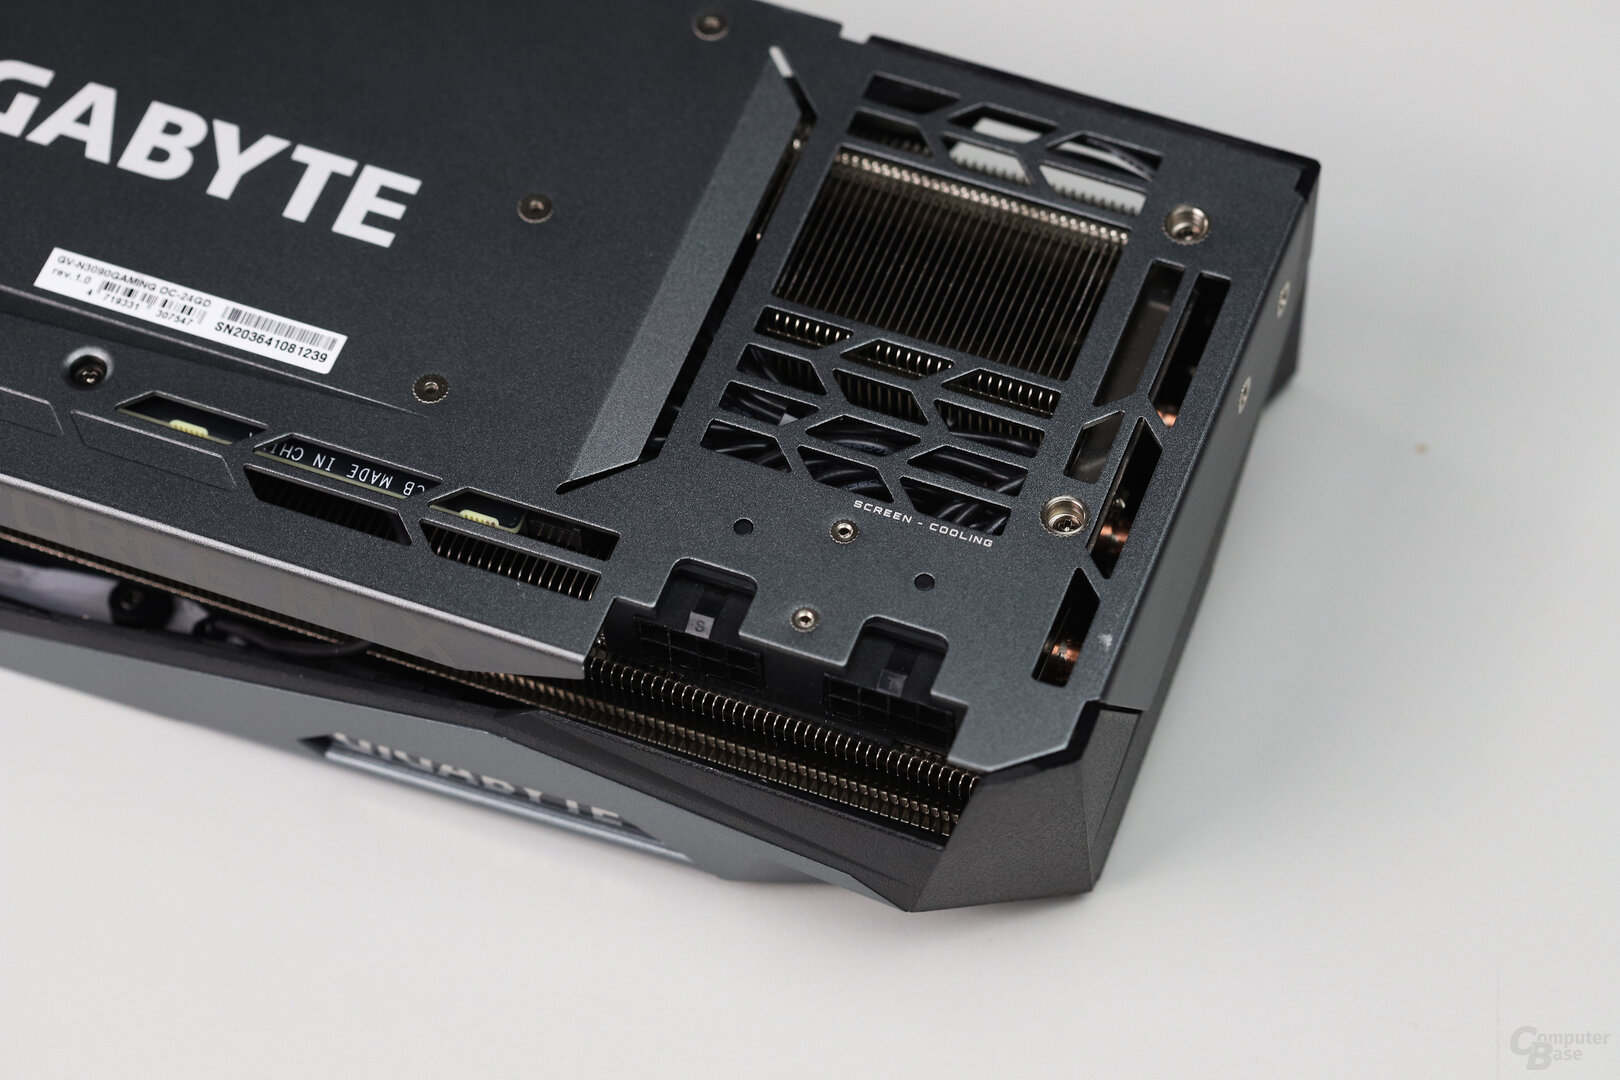 Die Gigabyte GeForce RTX 3090 Gaming OC